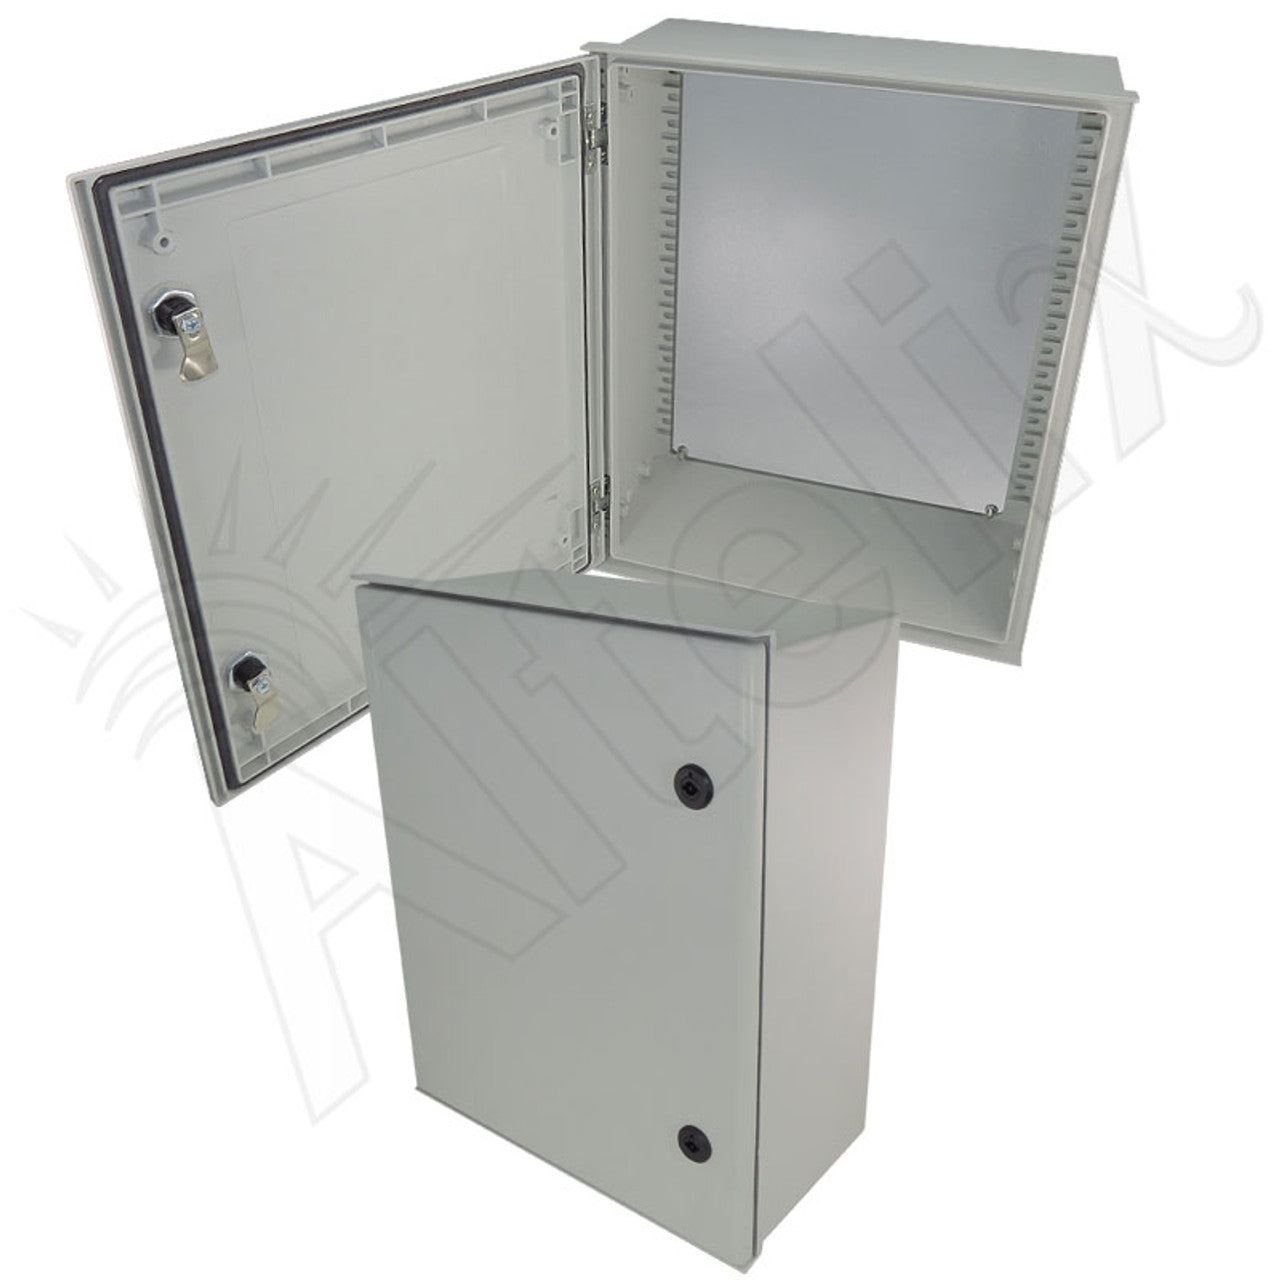 Altelix NEMA 3X Fiberglass Weatherproof Enclosure with Steel Equipment Mounting Plate